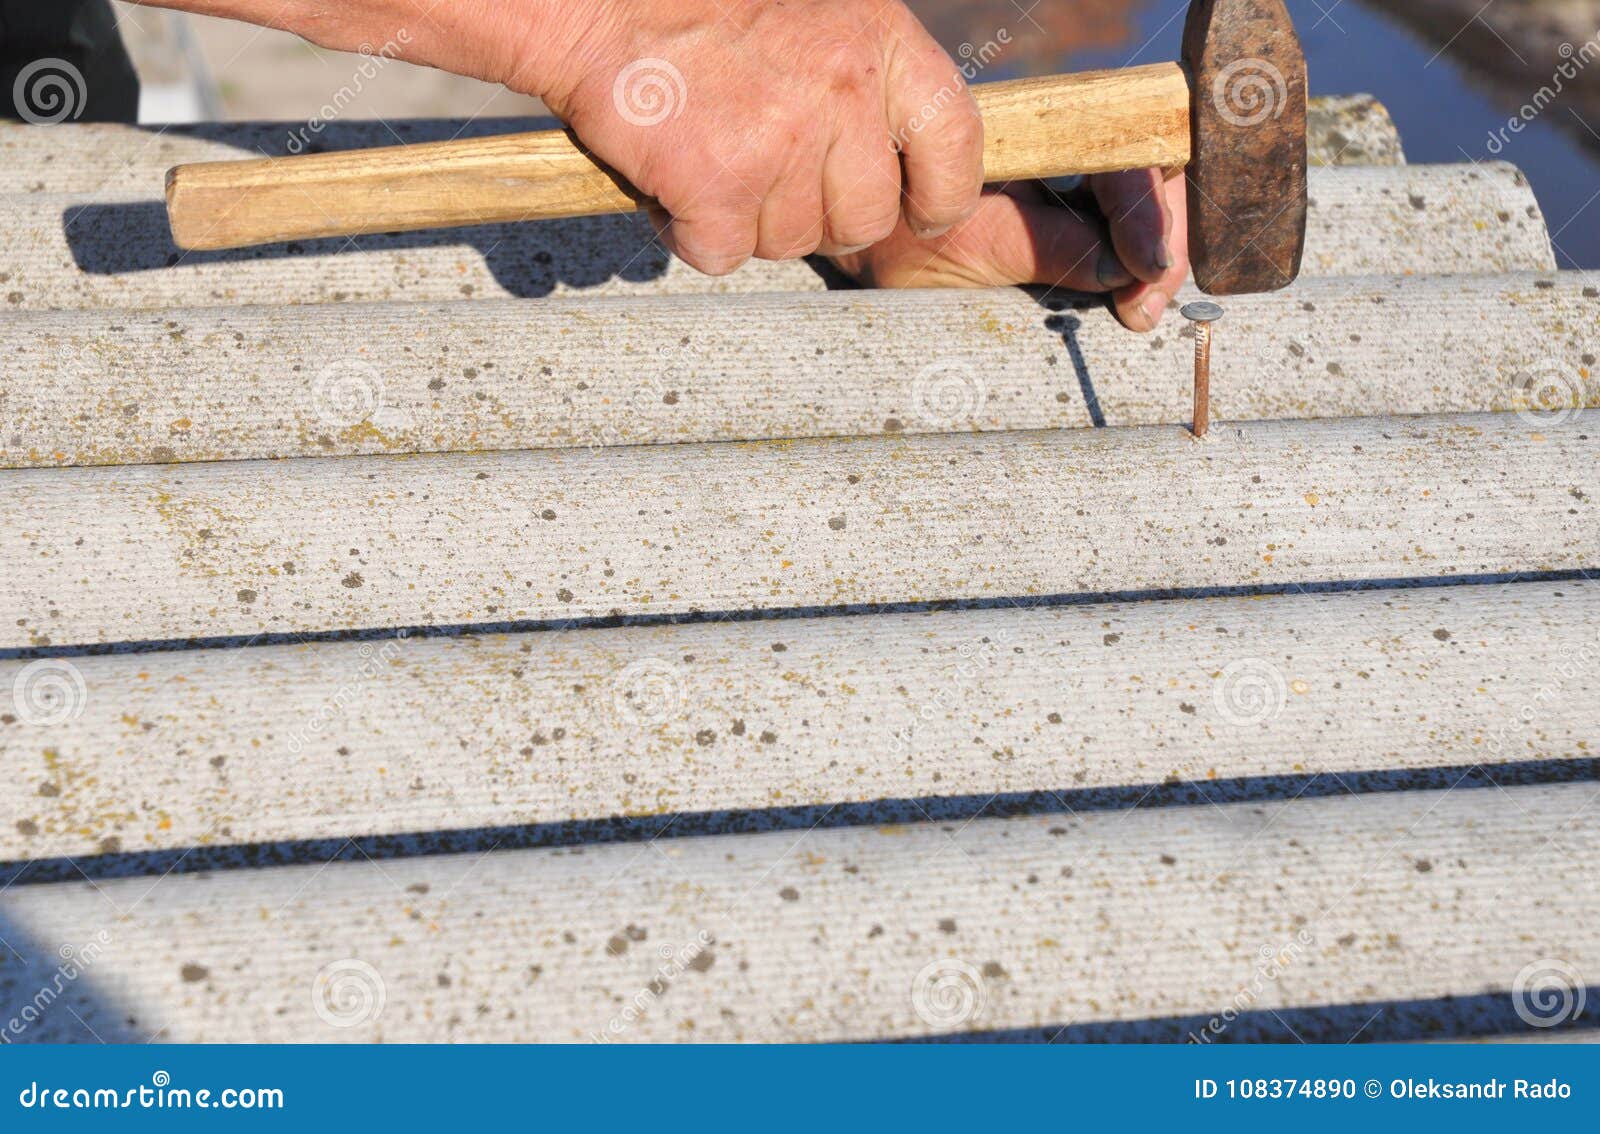 roofers replace damaged asbestos tile. repair asbestos roof. nailing roof shingles.